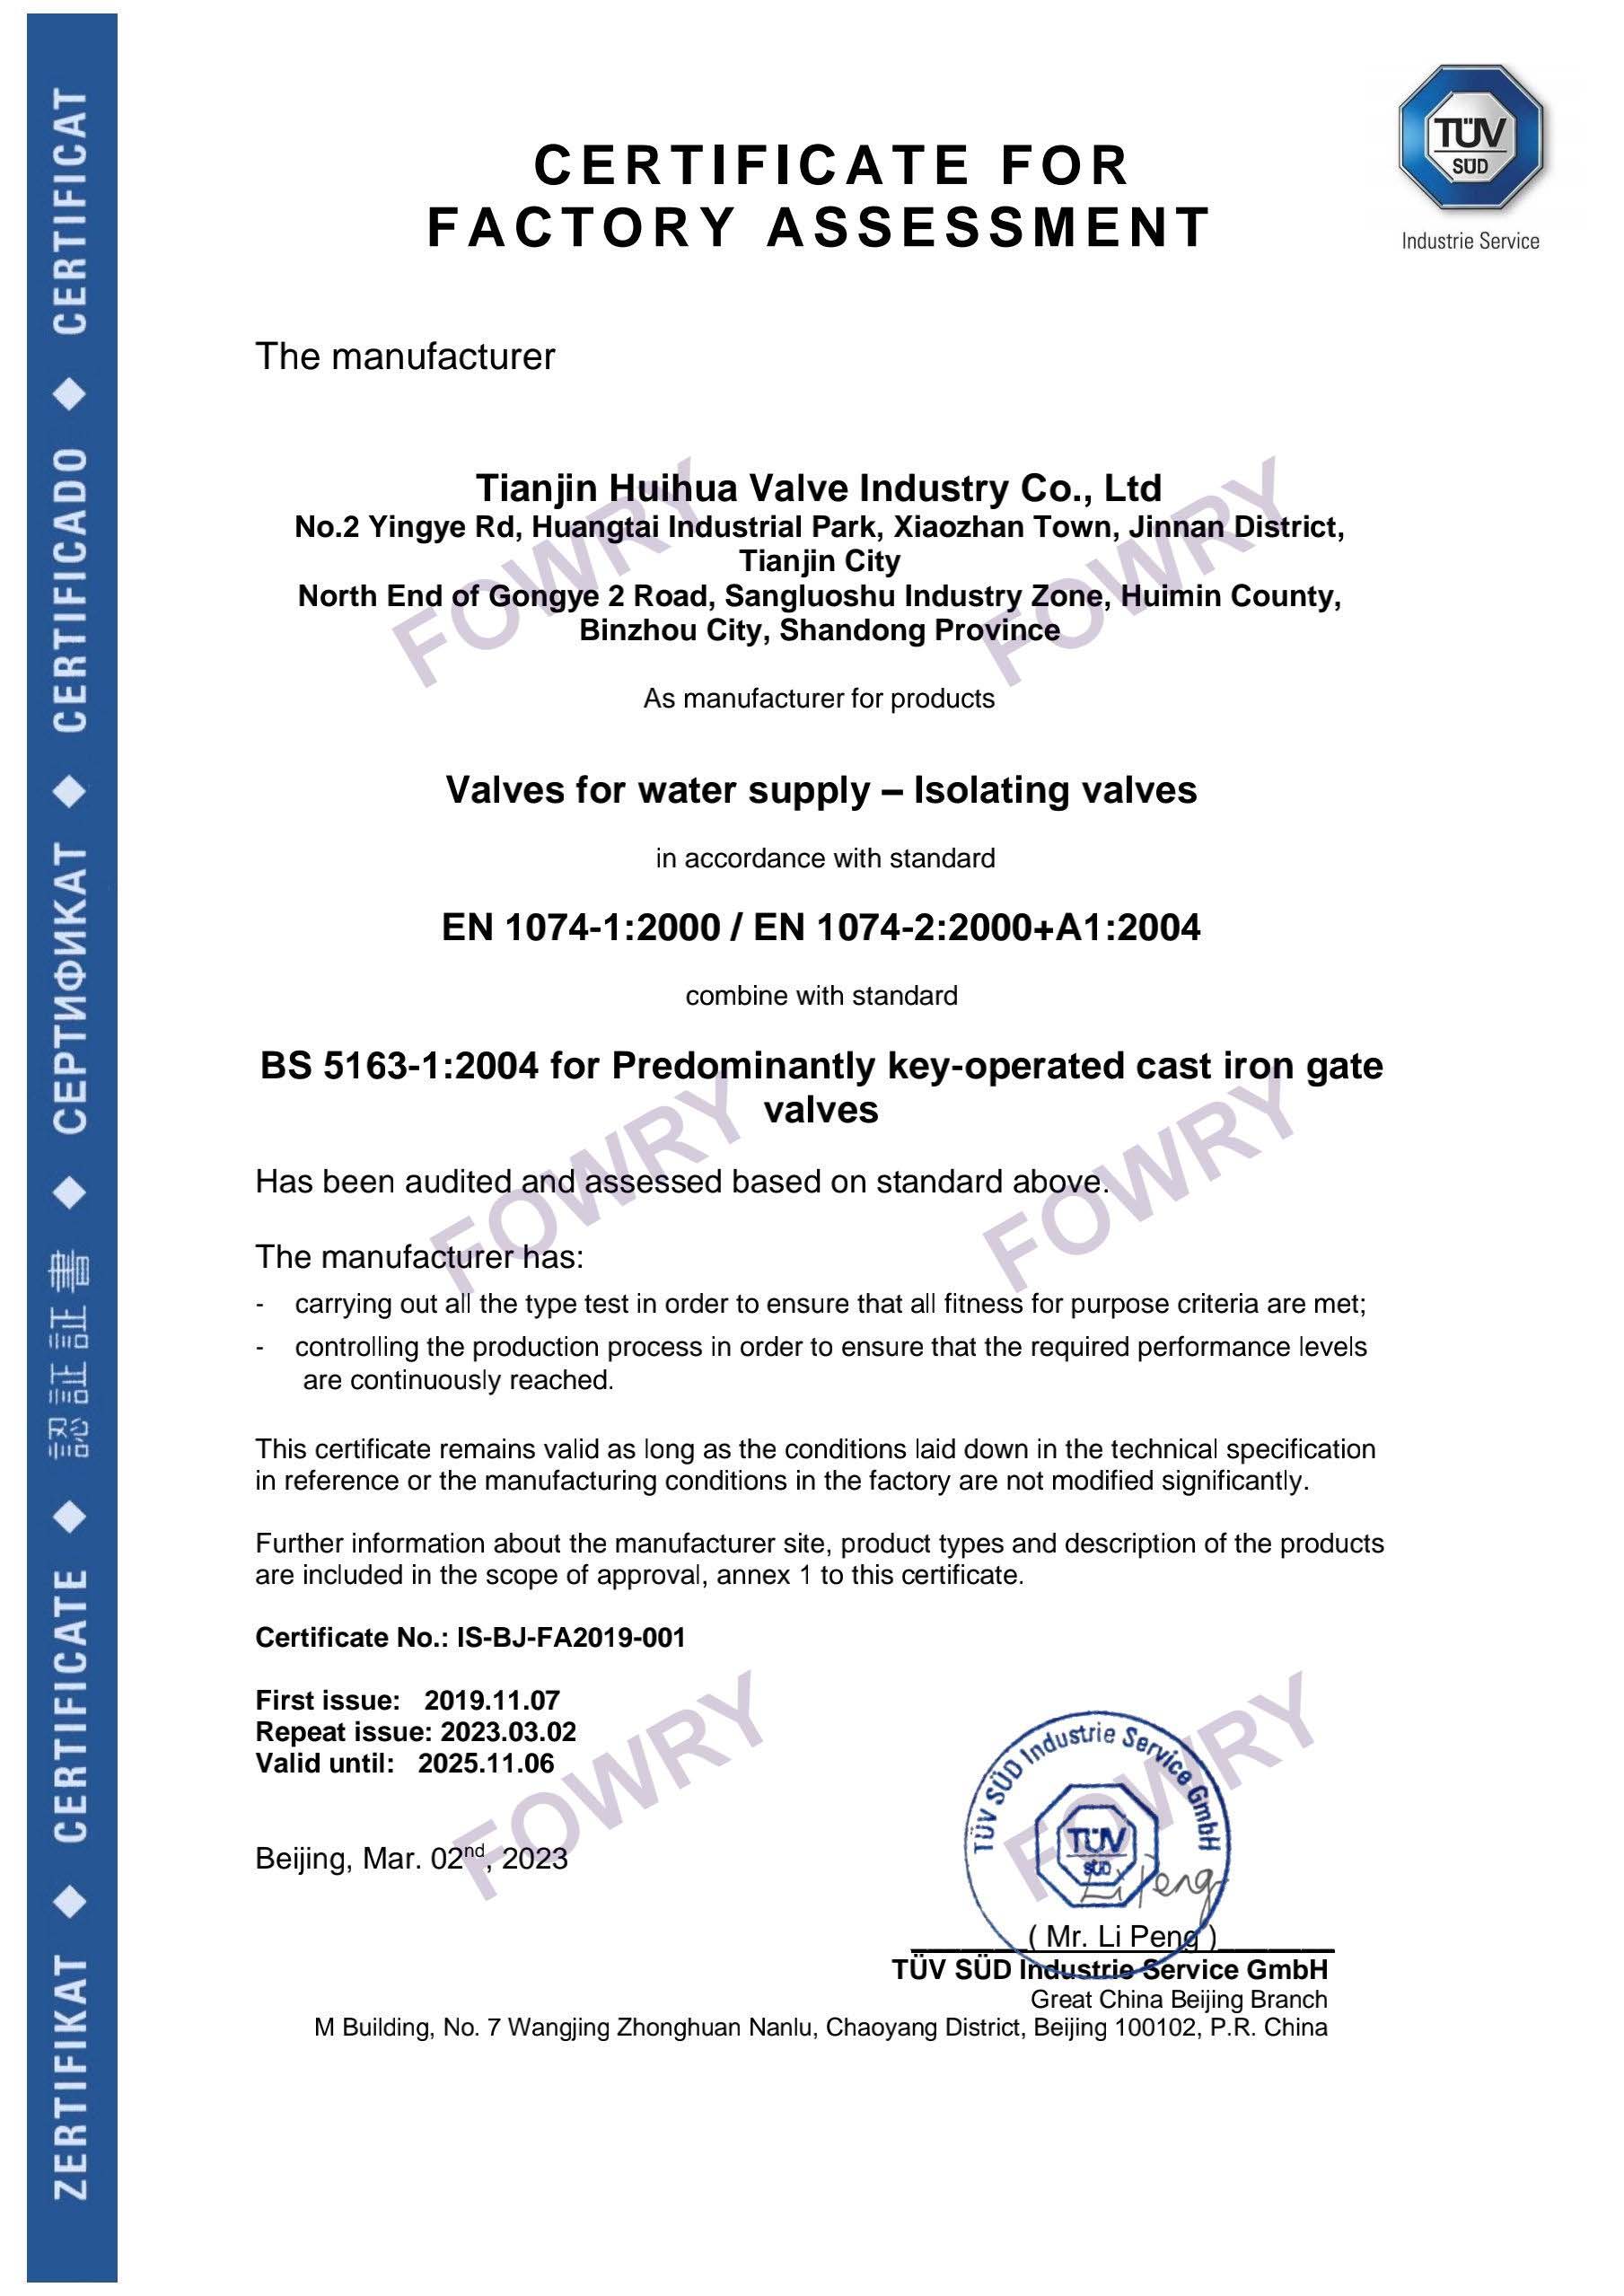 EN1074 Certificate of Gate Valve